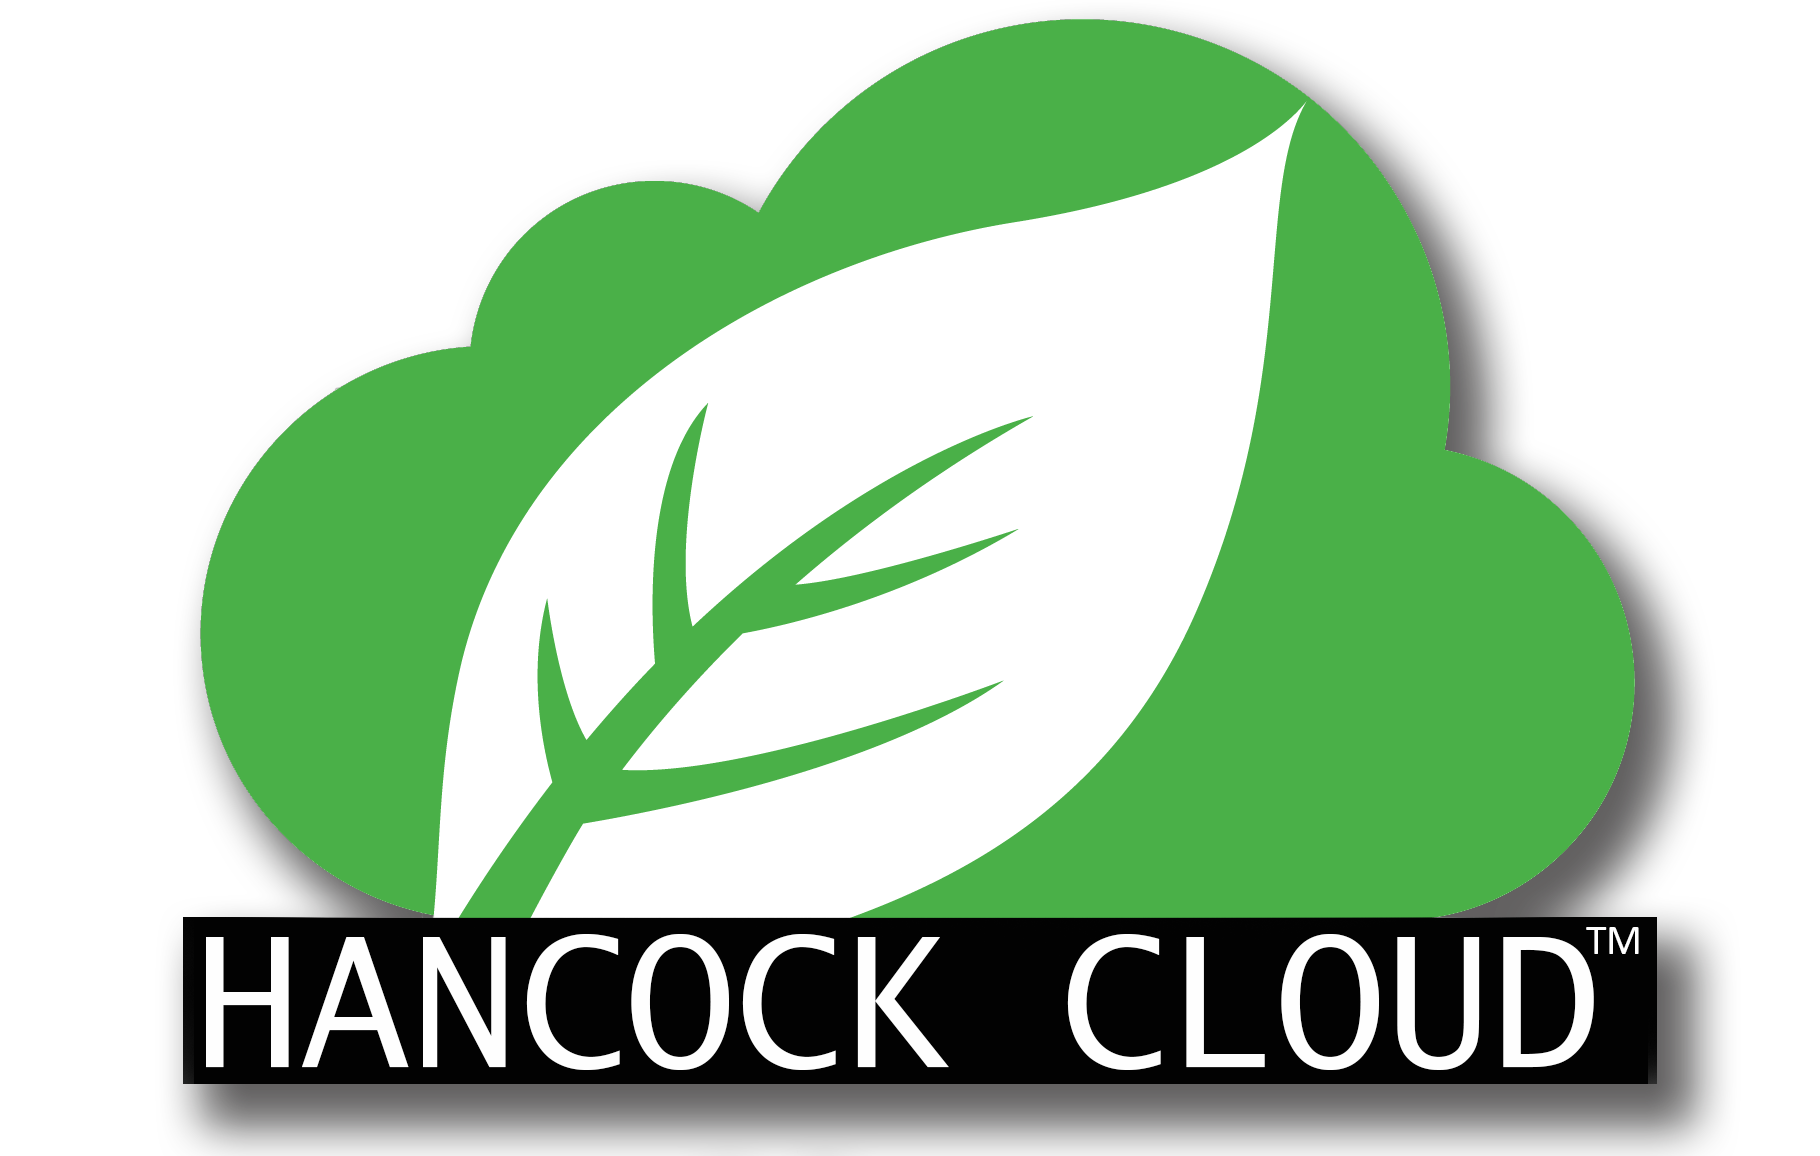 HancockCloud